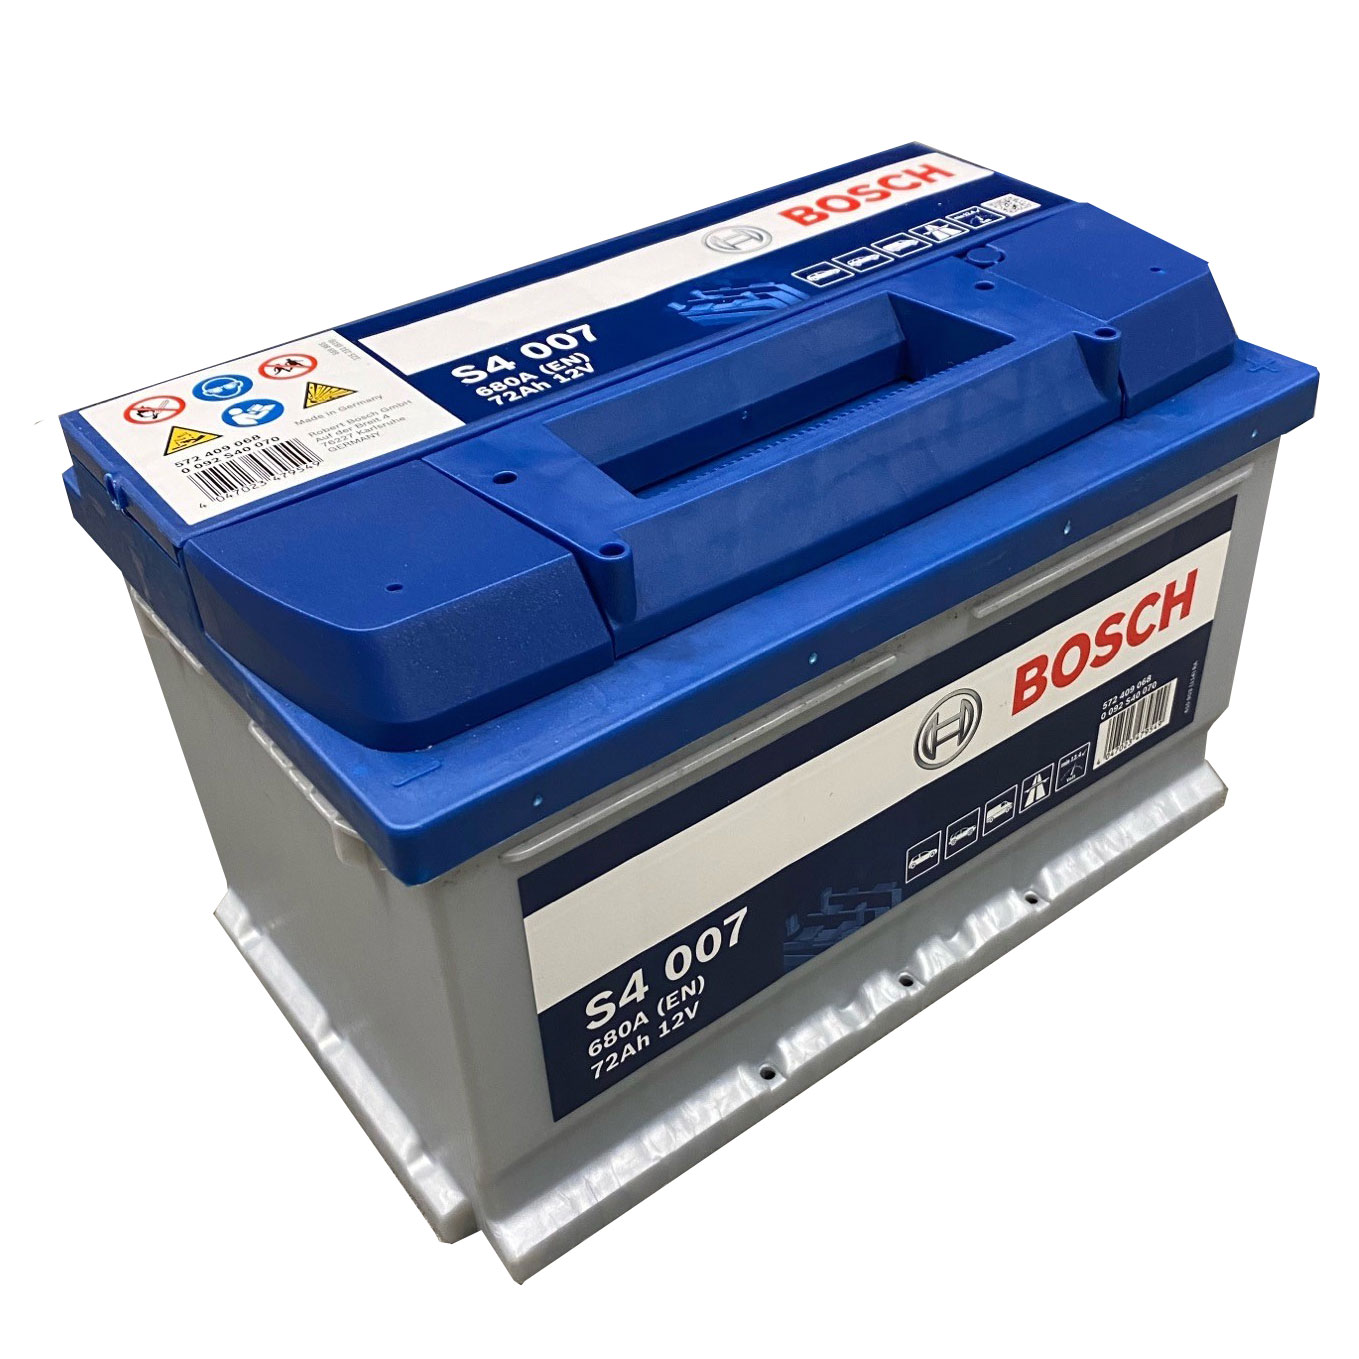 Bosch S4 007 Autobatterie 12V 72Ah 680A, Starterbatterie, PKW, Starter, Kfz